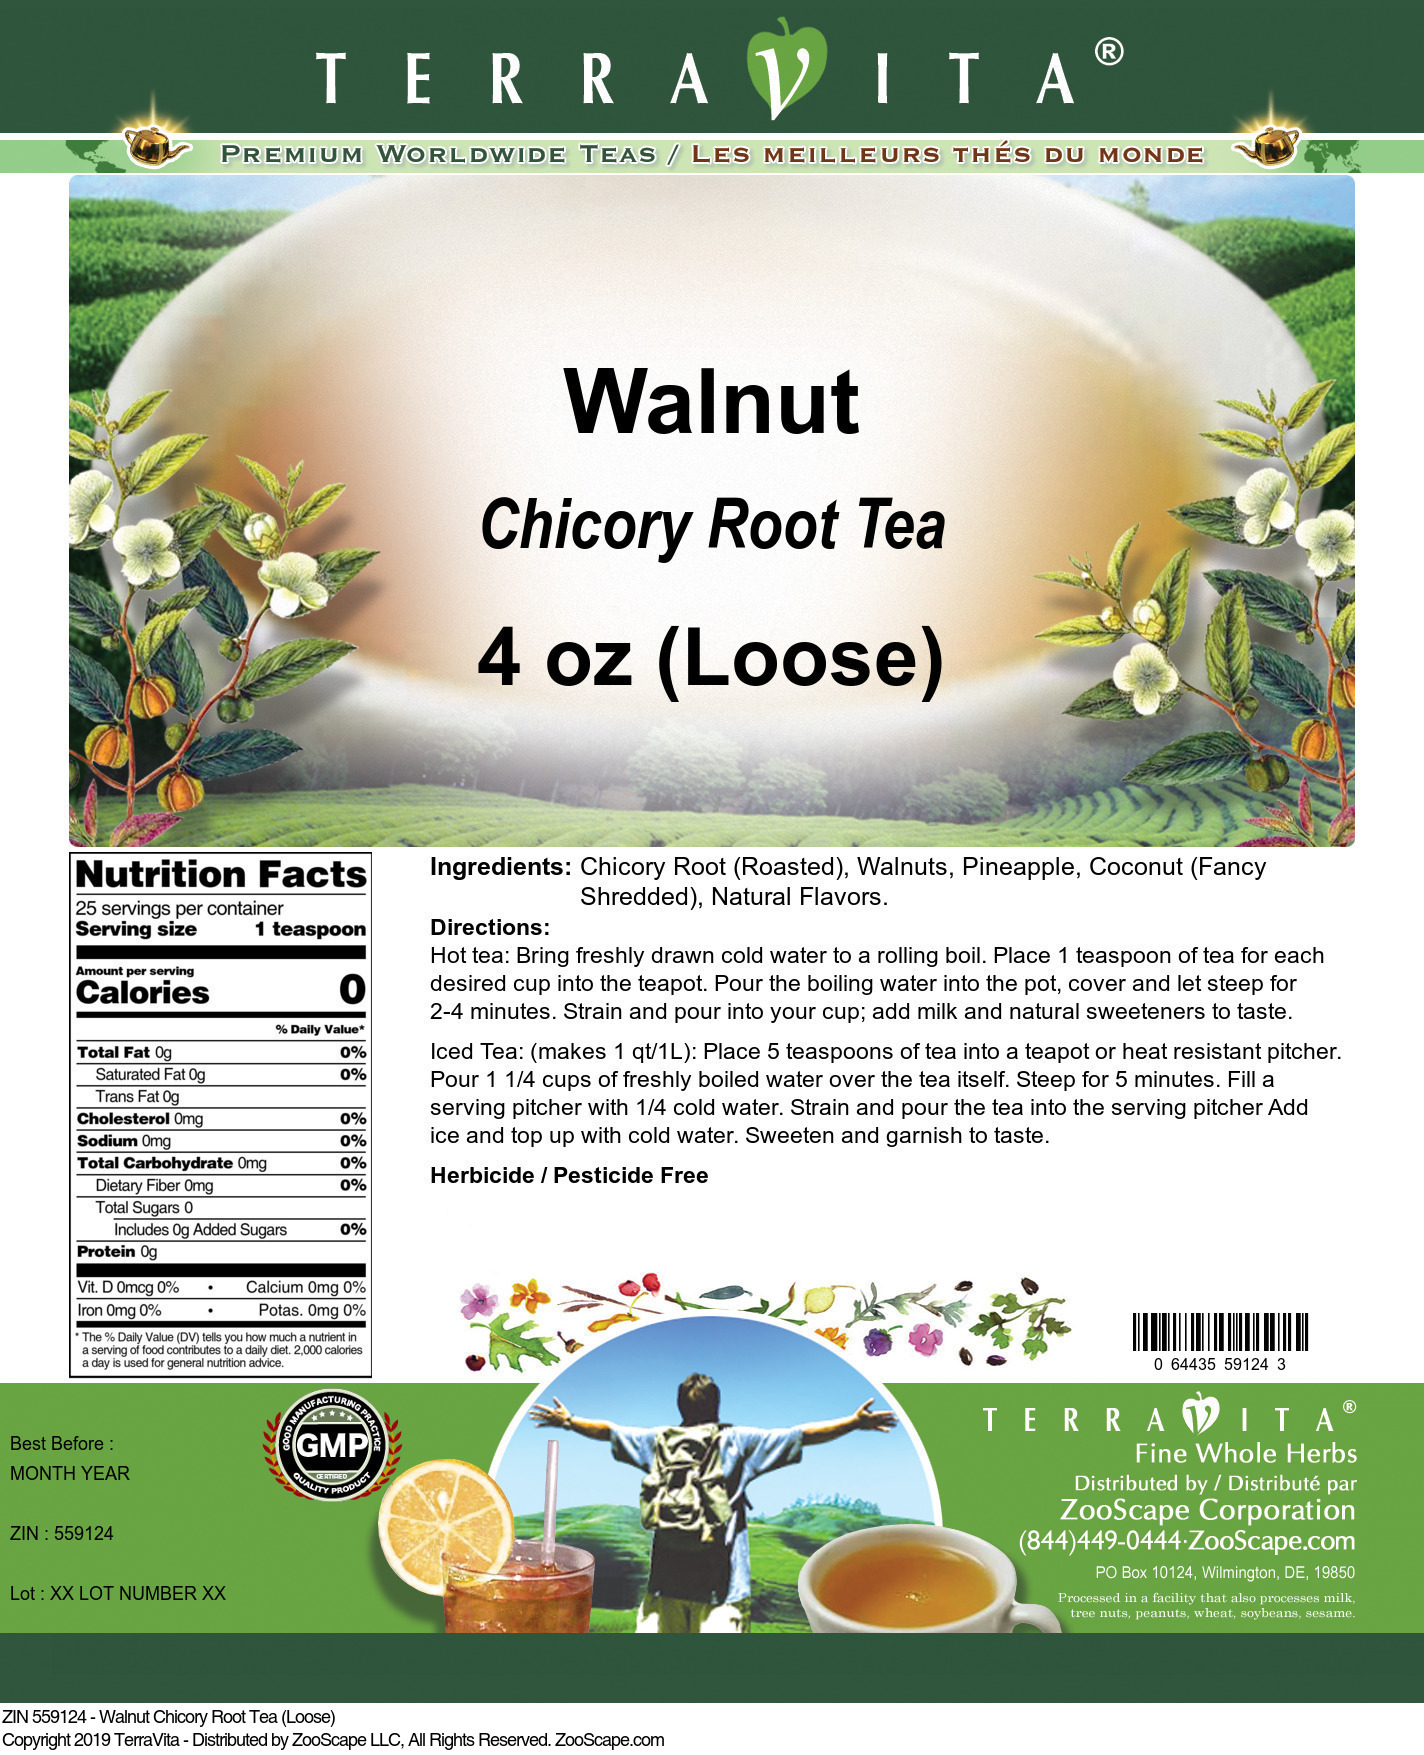 Walnut Chicory Root Tea (Loose) - Label